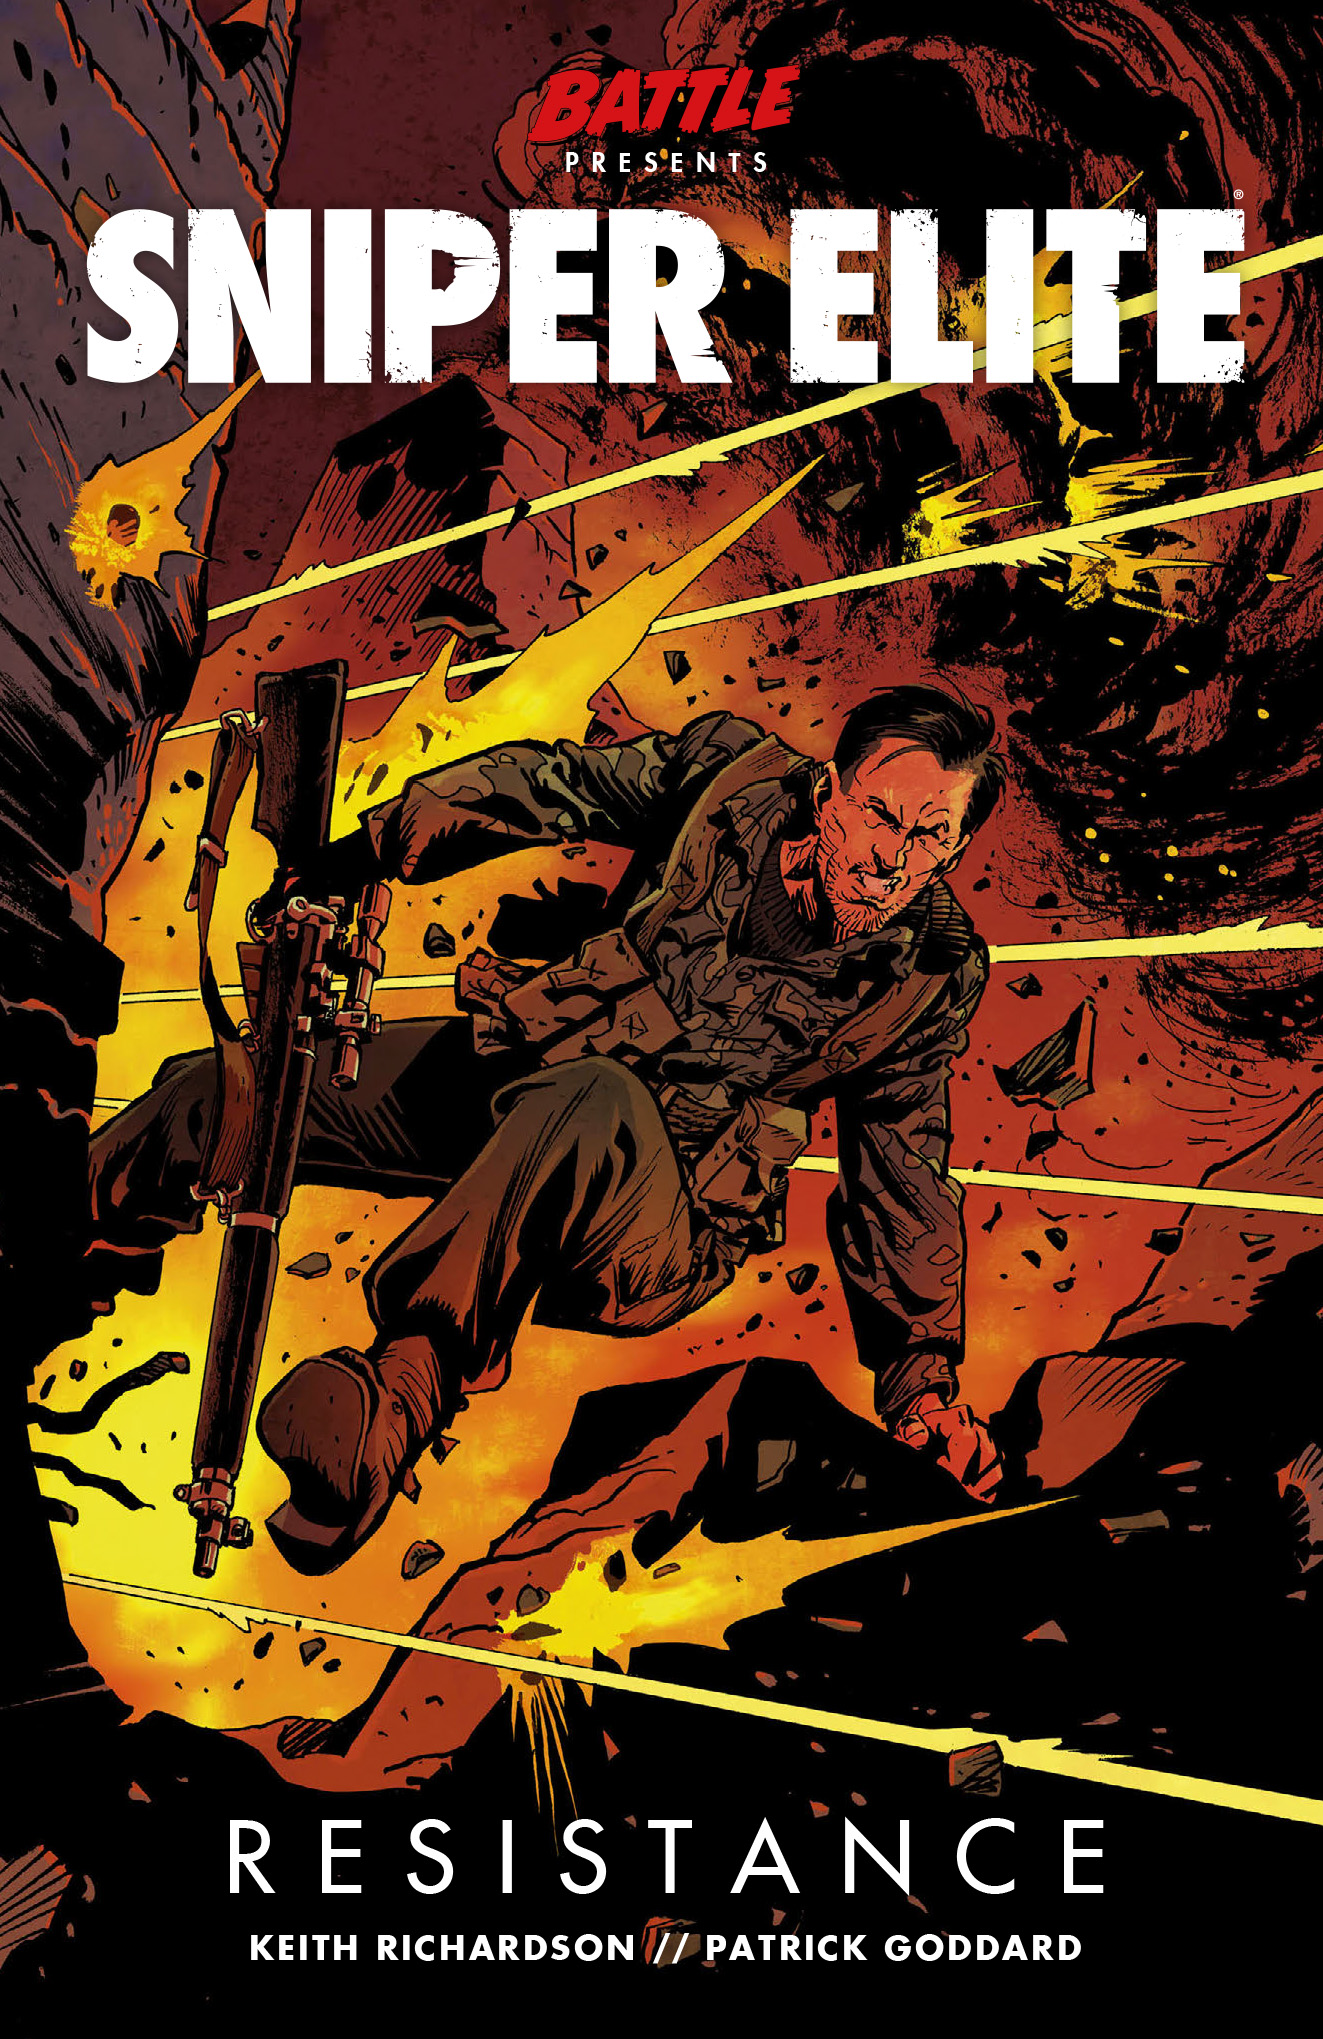 Sniper Elite Resistance Tpb | Read Sniper Elite Resistance Tpb comic online  in high quality. Read Full Comic online for free - Read comics online in  high quality .|viewcomiconline.com